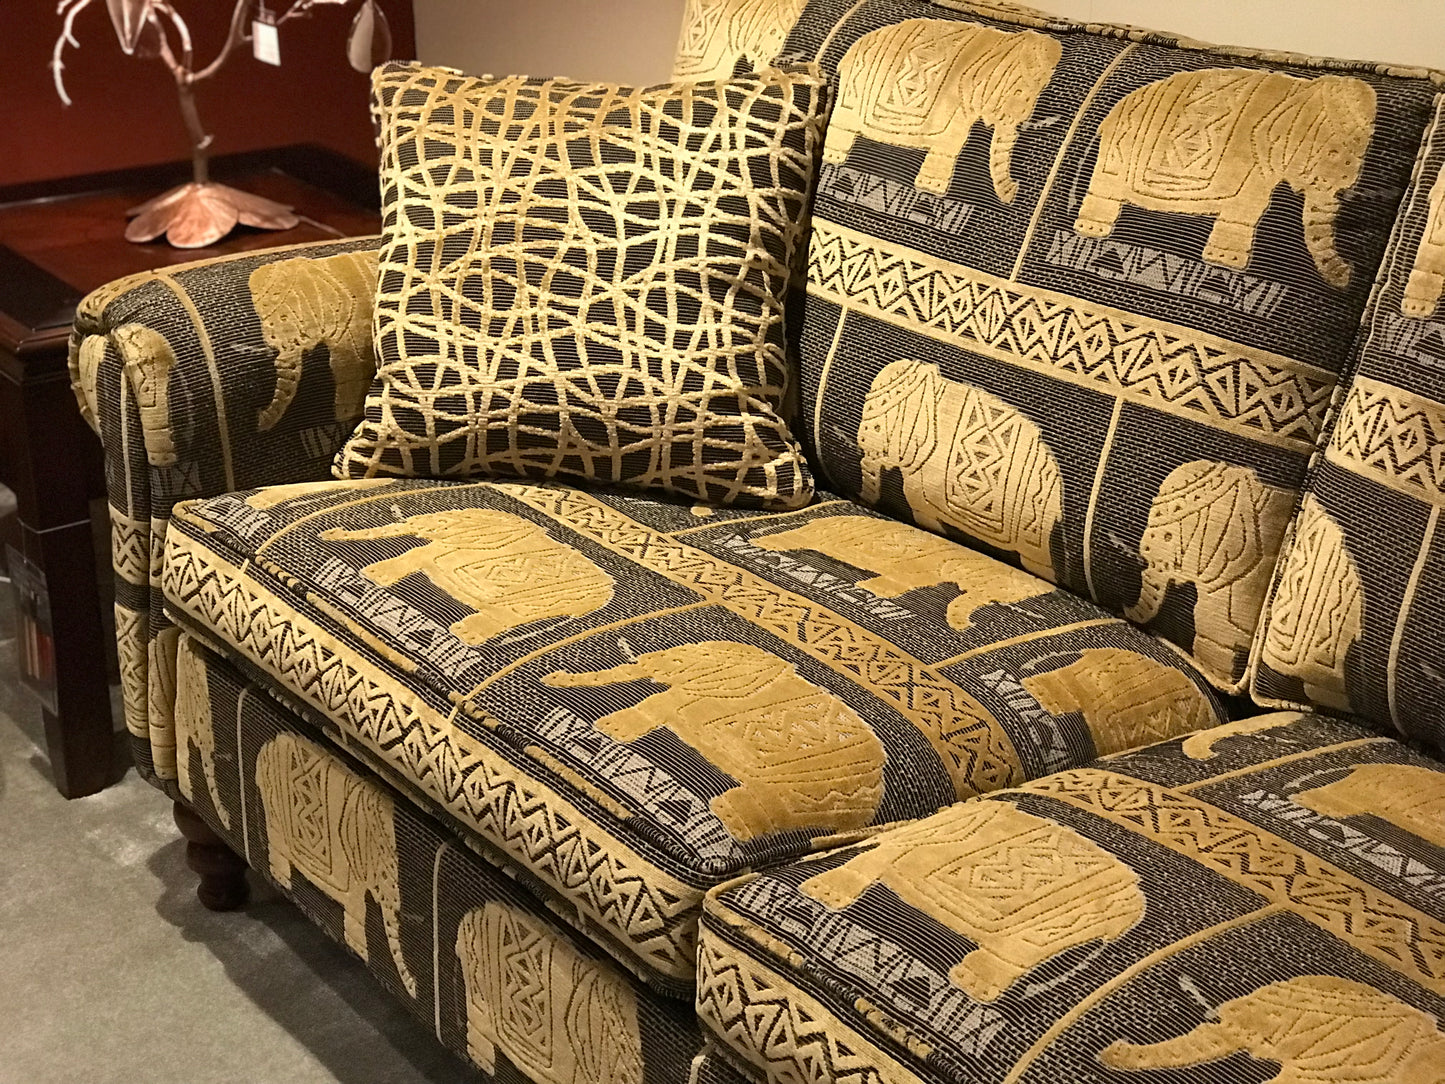 Elephant sofa